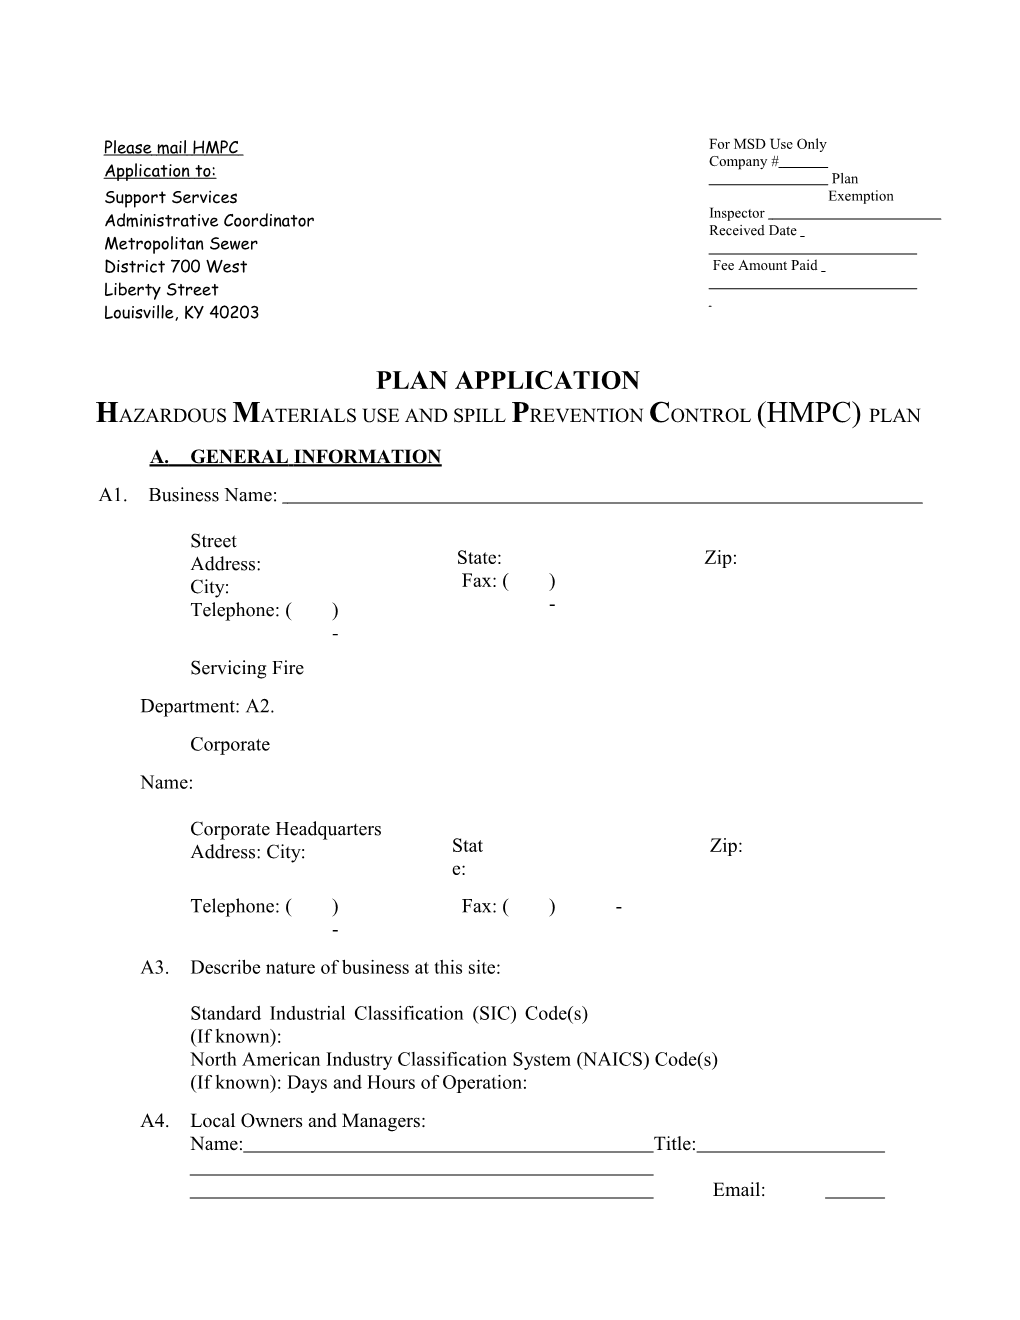 HMPC Application 2008 Blankform-New Logom